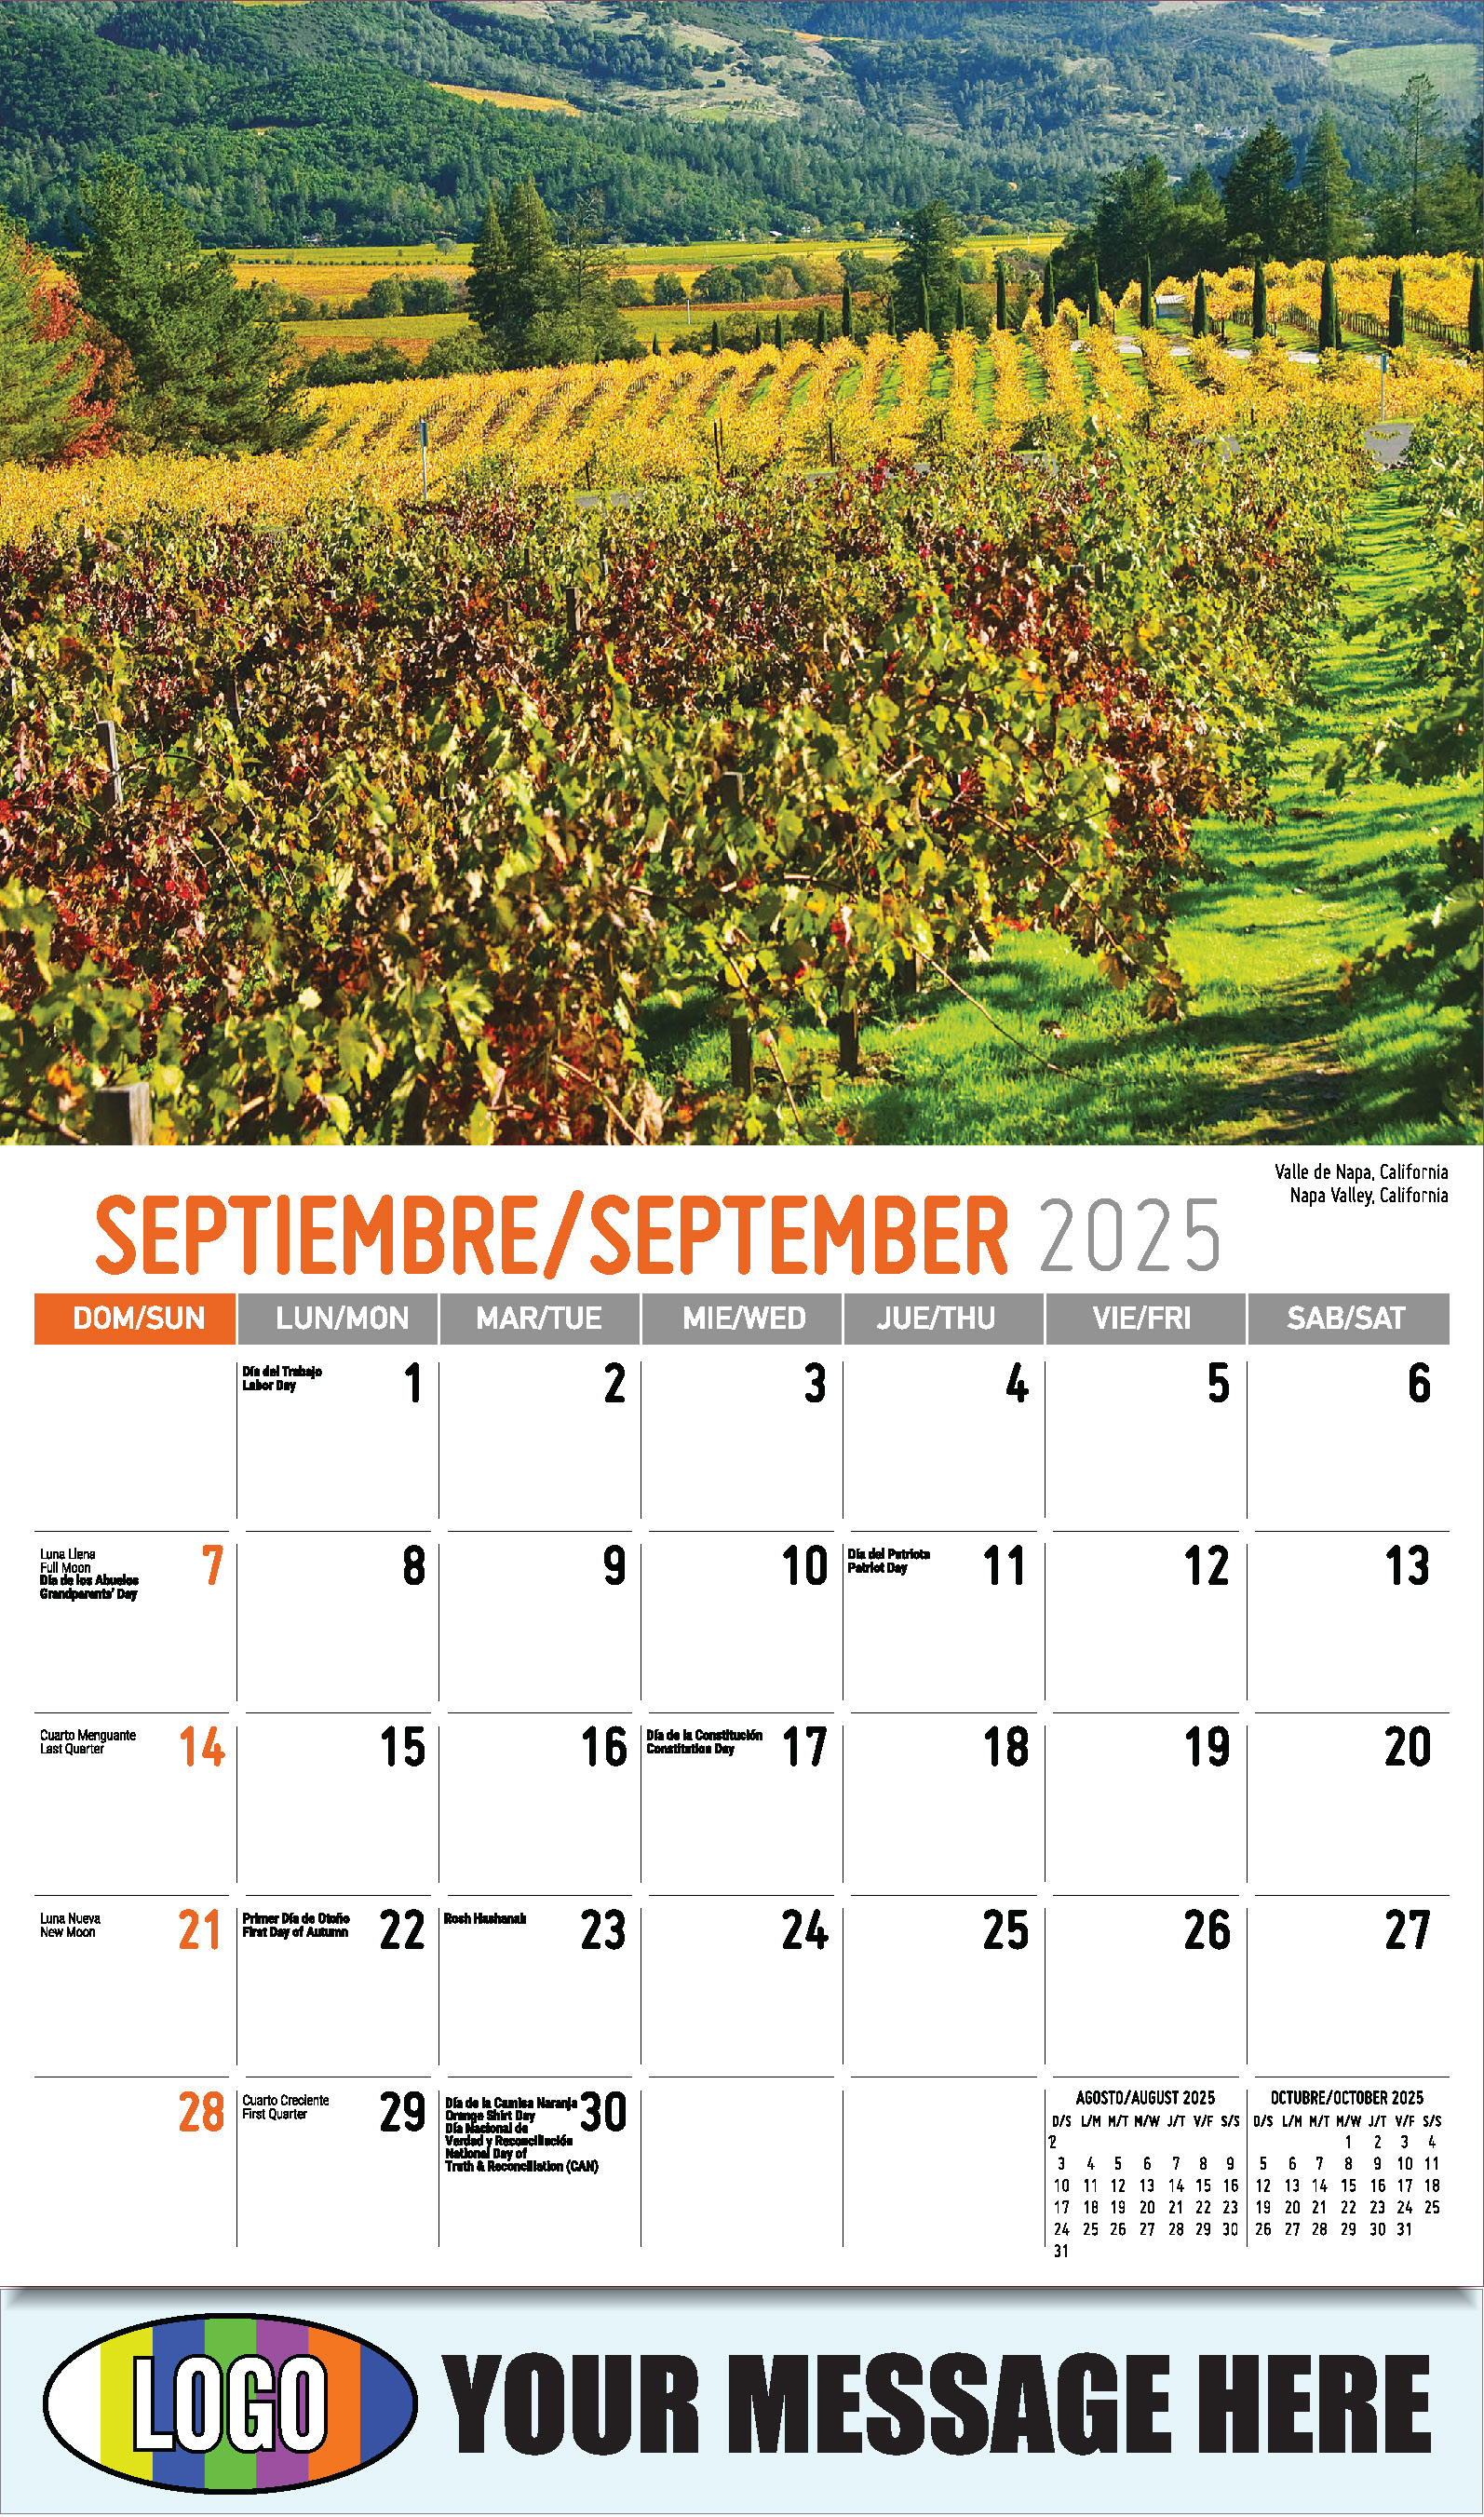 Scenes of America 2025 Bilingual Business Promo Calendar - September